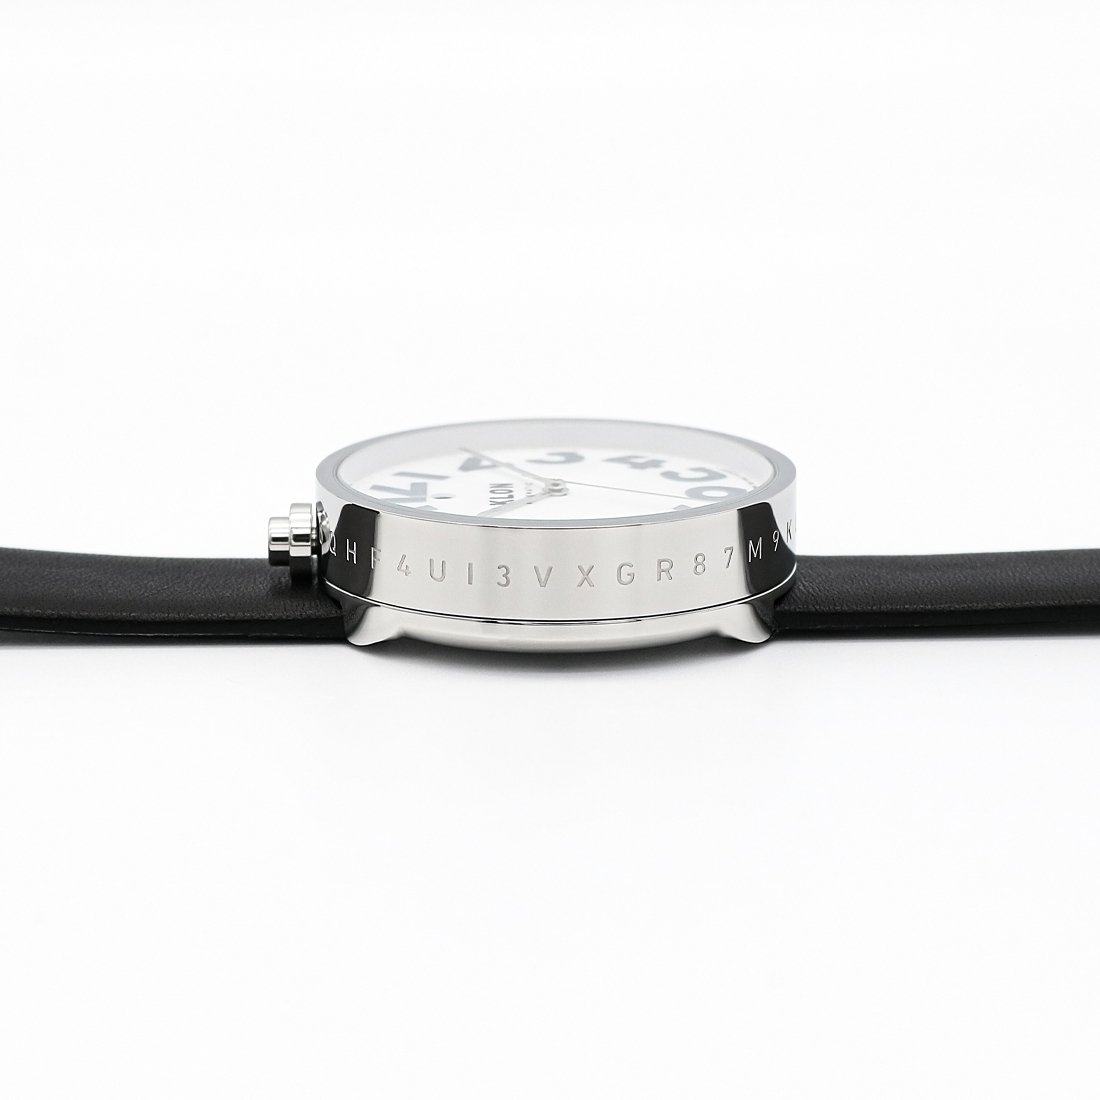 KLON AUTOMATIC BLACK LEATHER -HIDE TIME- 43mm カジュアル 腕時計